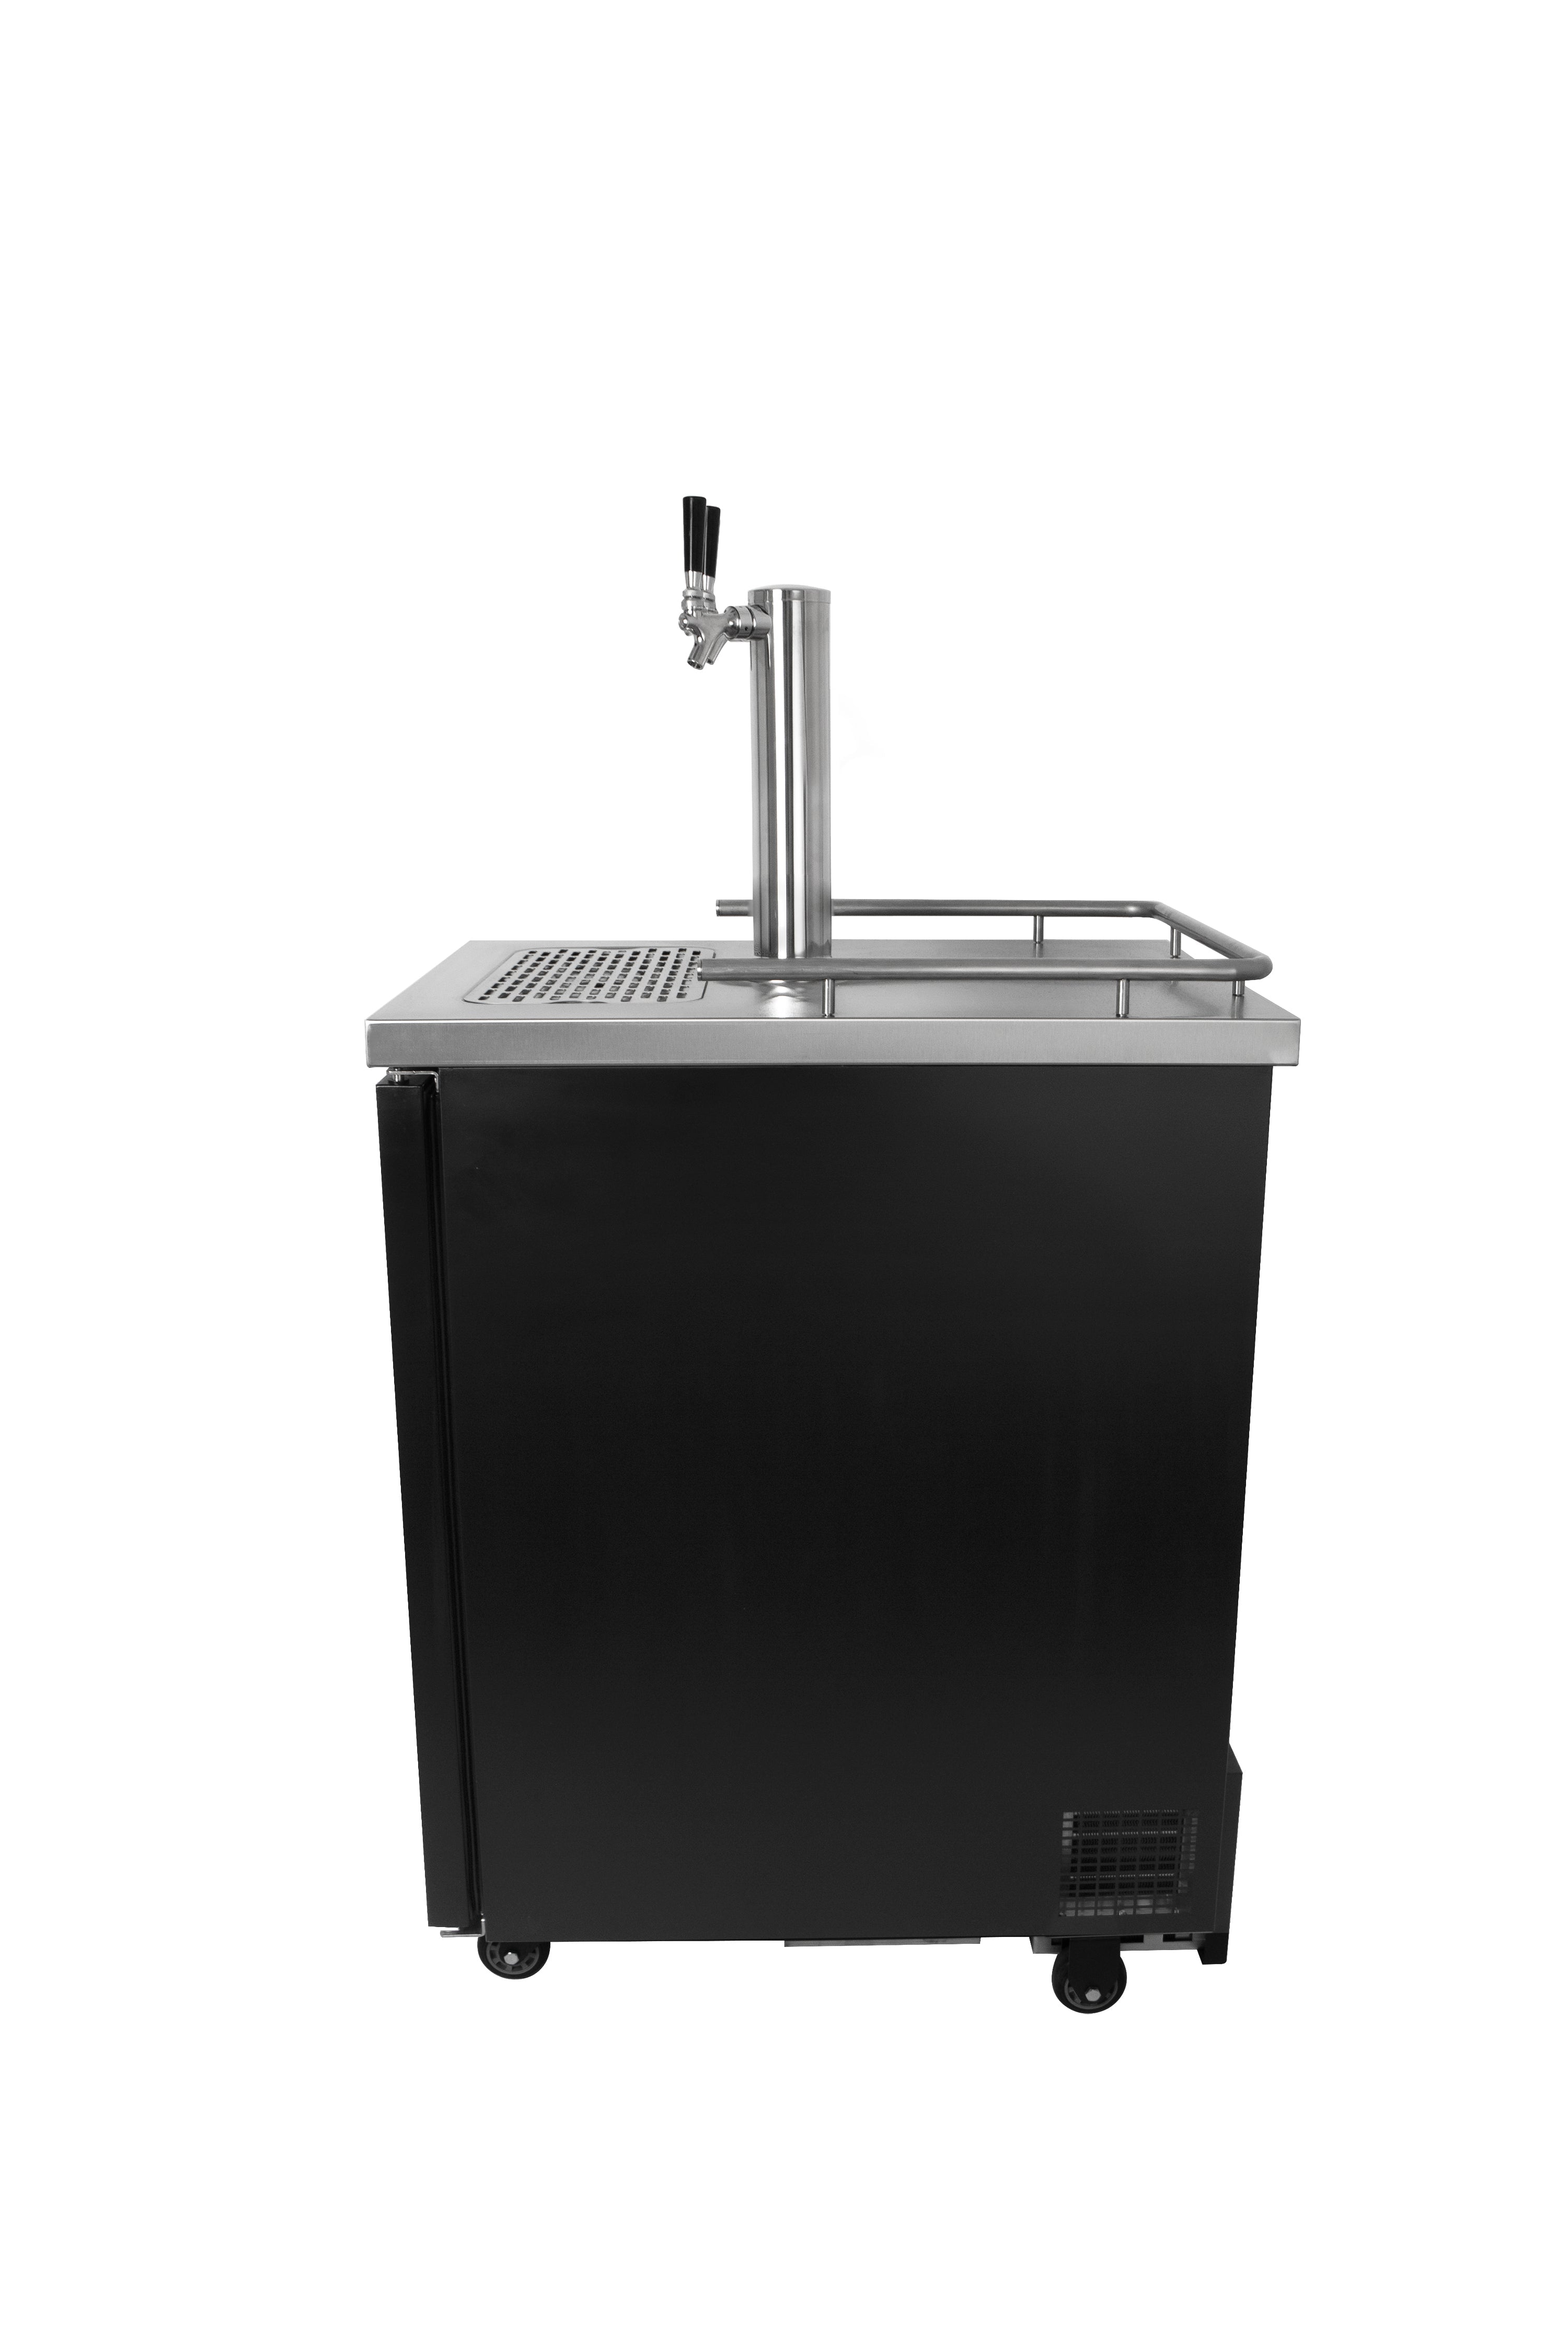 Kegco ICTCK-1B-2 Cold Brew Coffee Dispenser